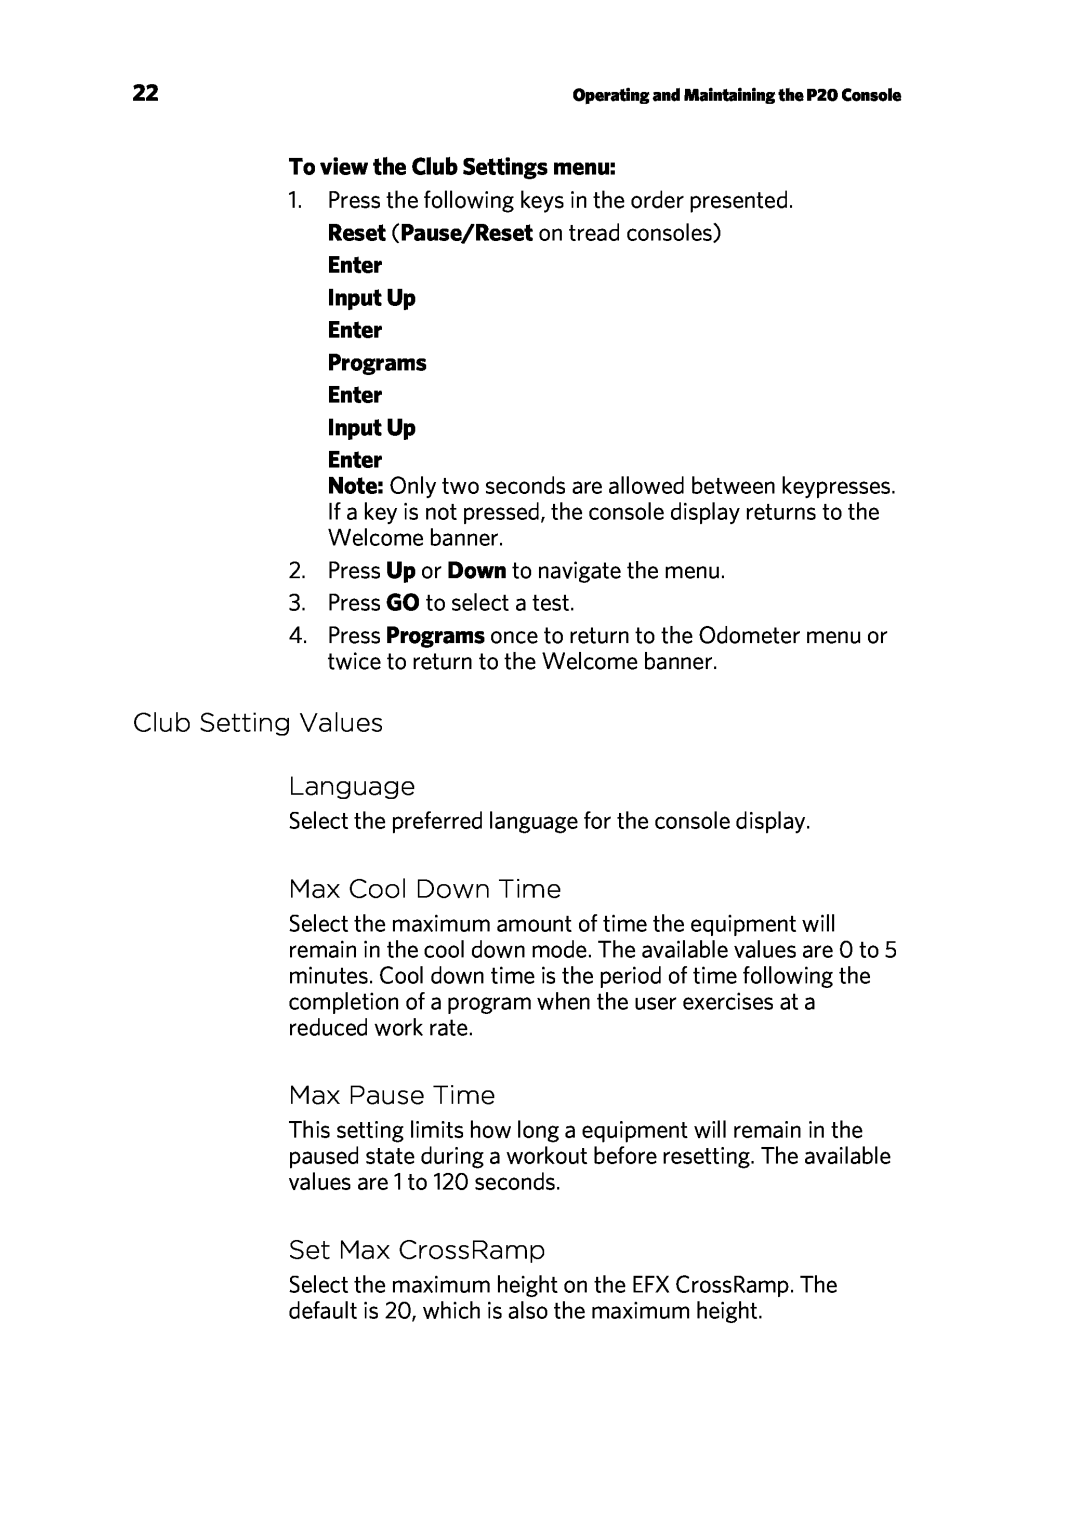 Precor 300753-201 manual Club Setting Values Language, Max Cool Down Time, Max Pause Time, Set Max CrossRamp, Enter 